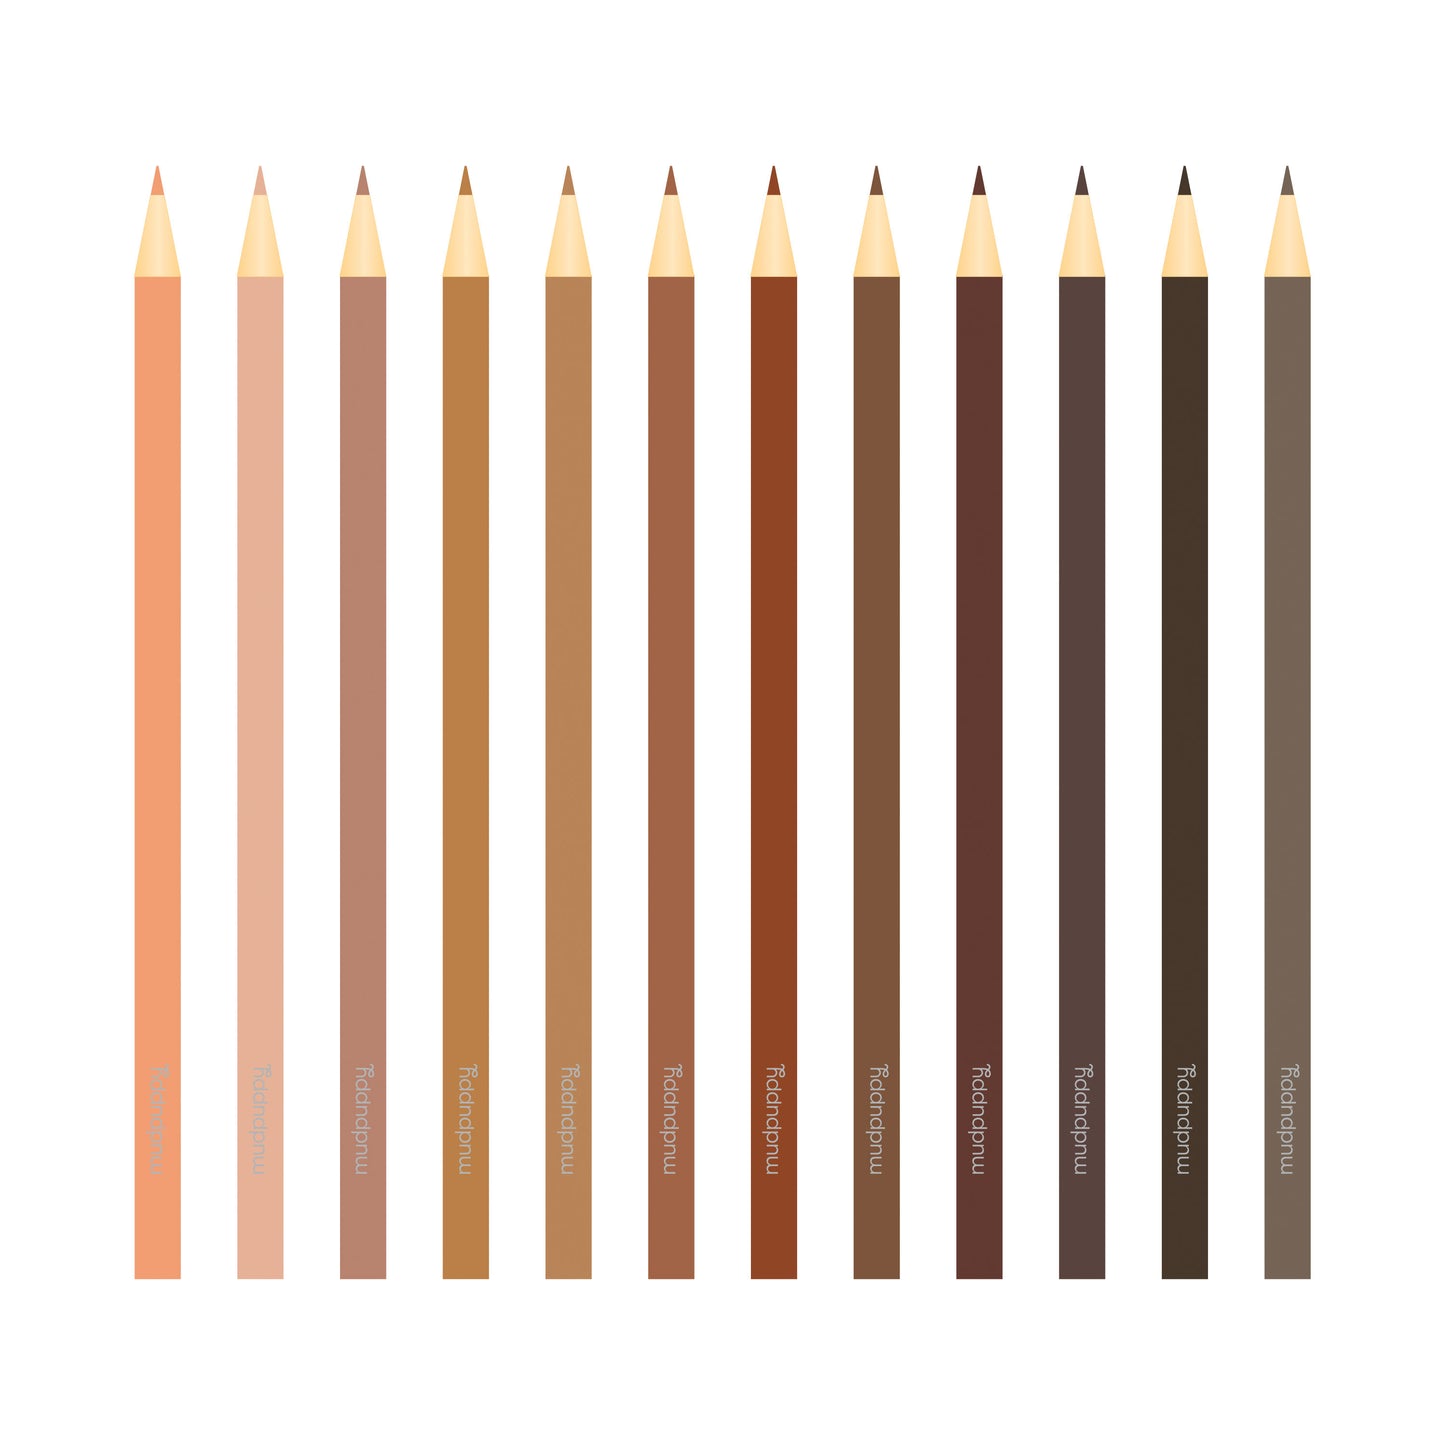 We Are Colourful Skin Tone Pencils